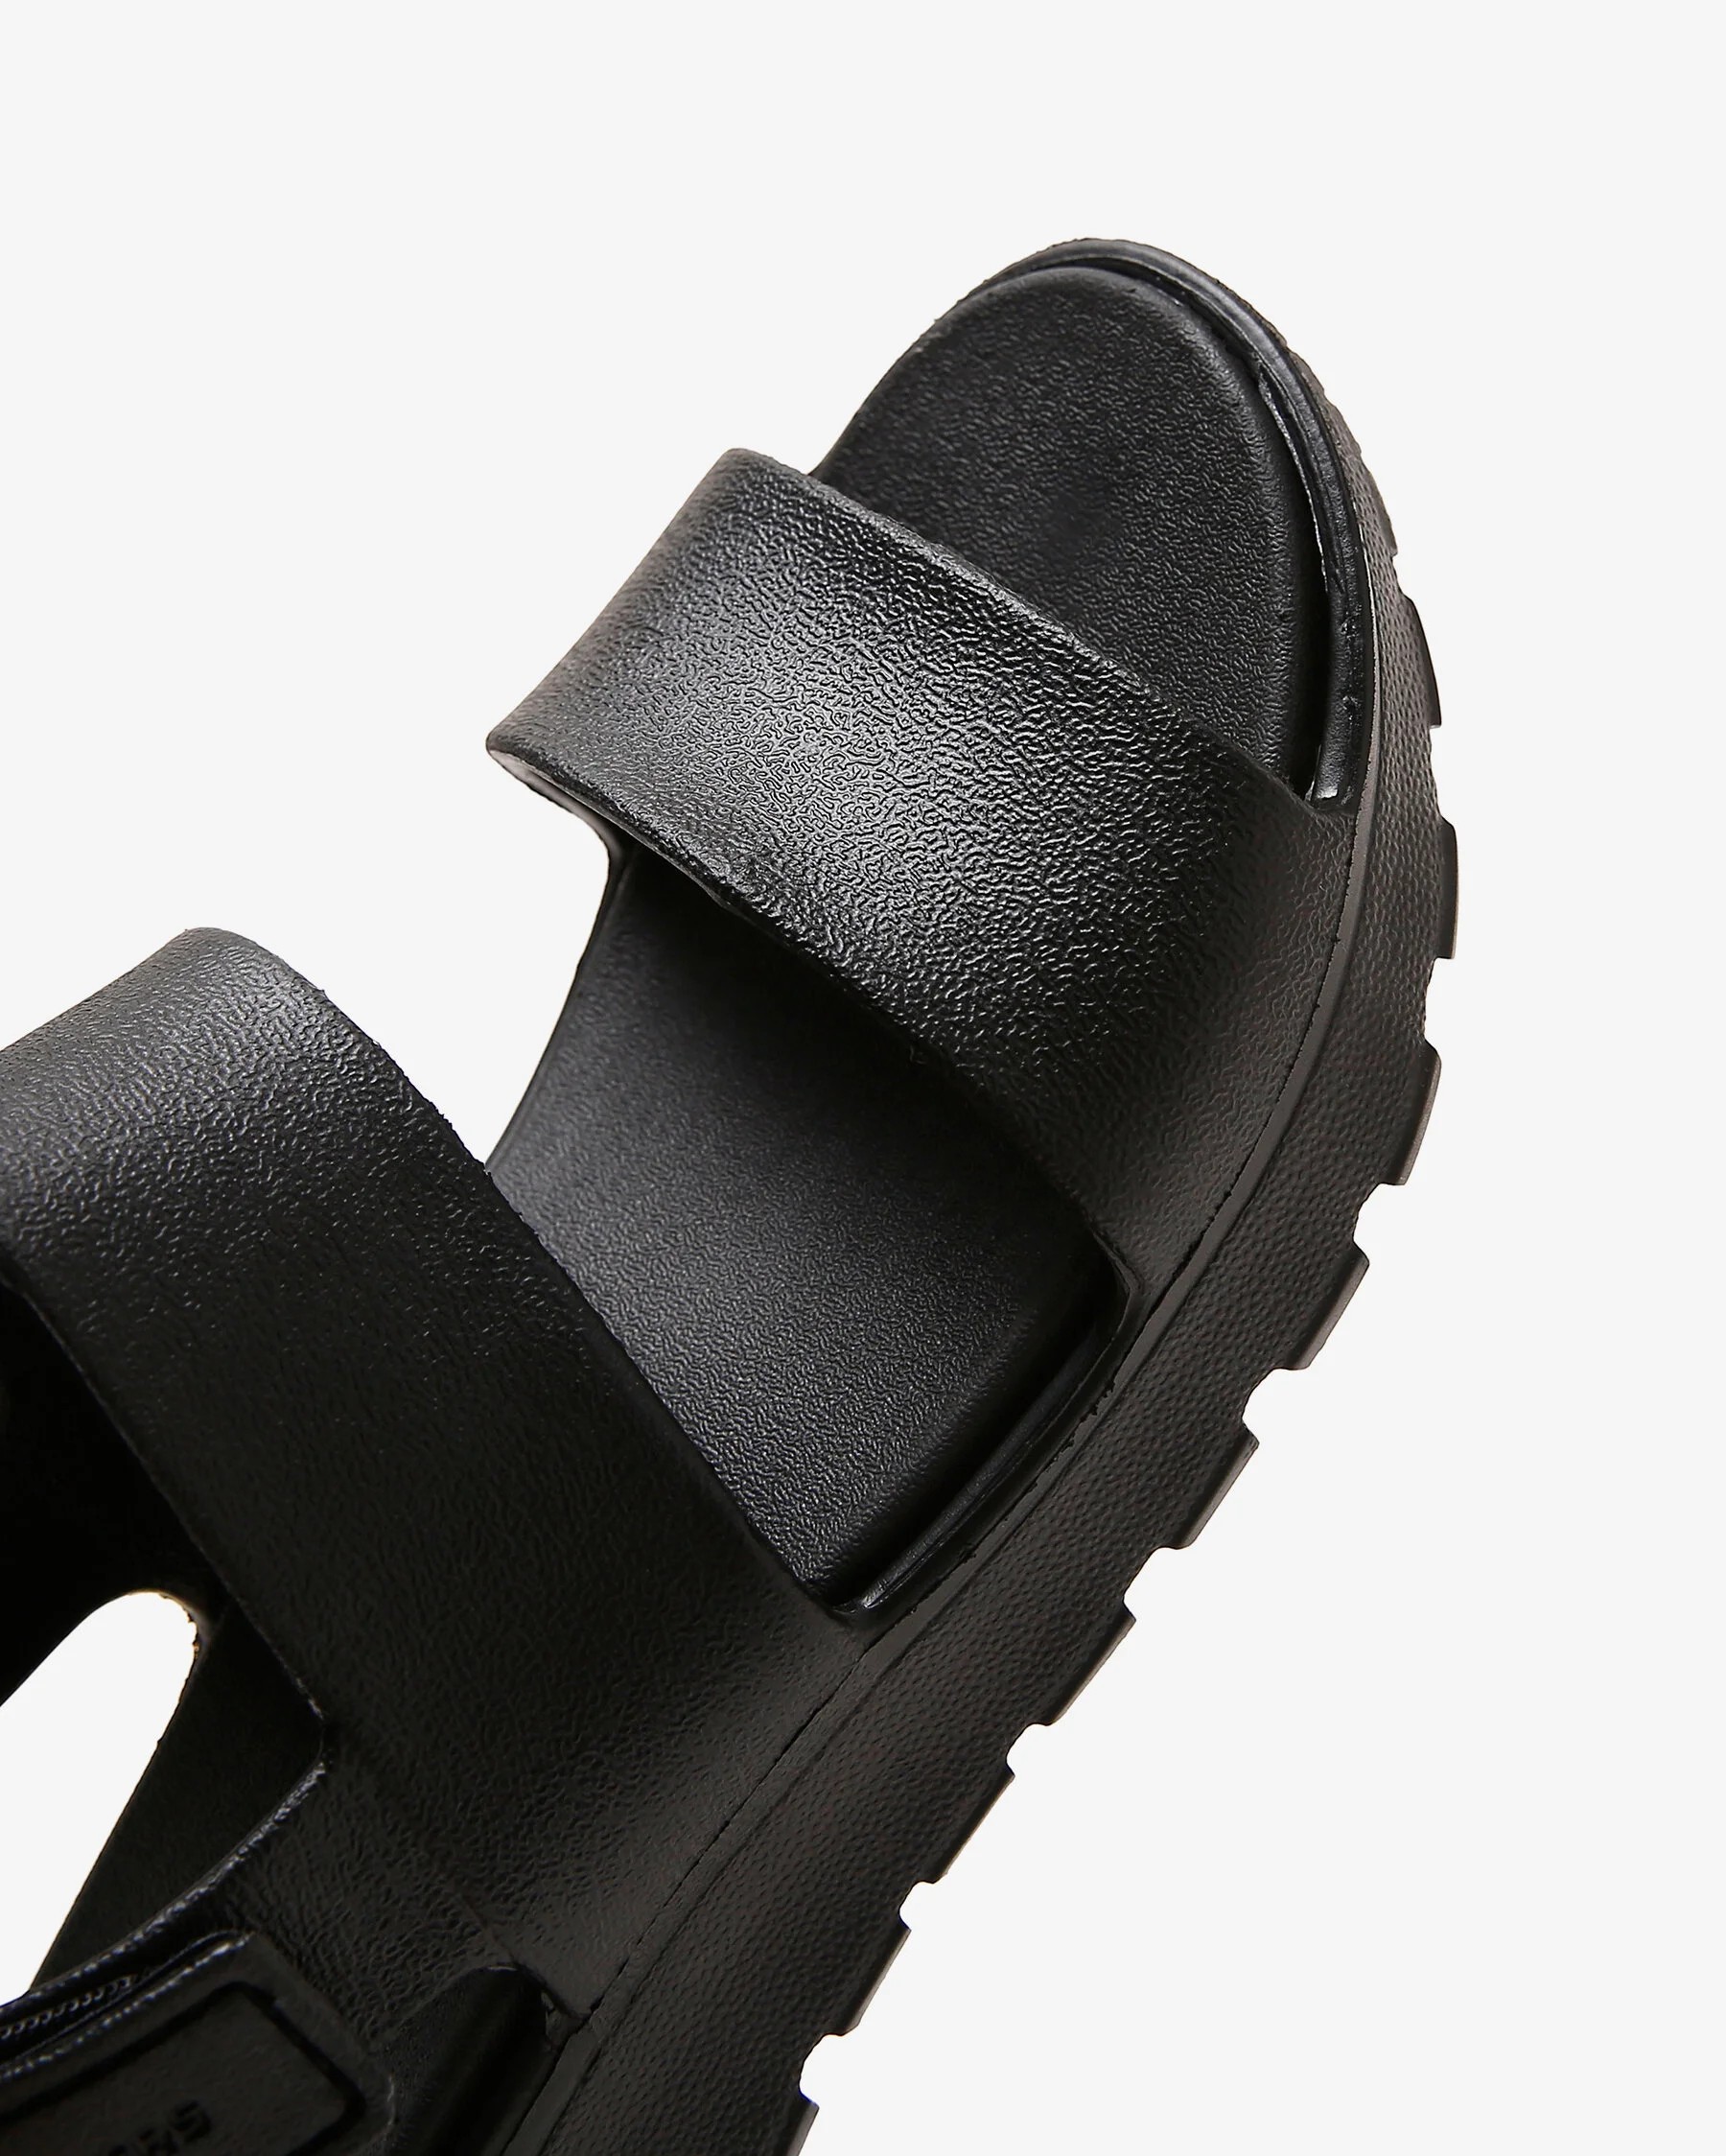 Skechers Arch Fıt Footsteps Day Dream Kadın Sandalet